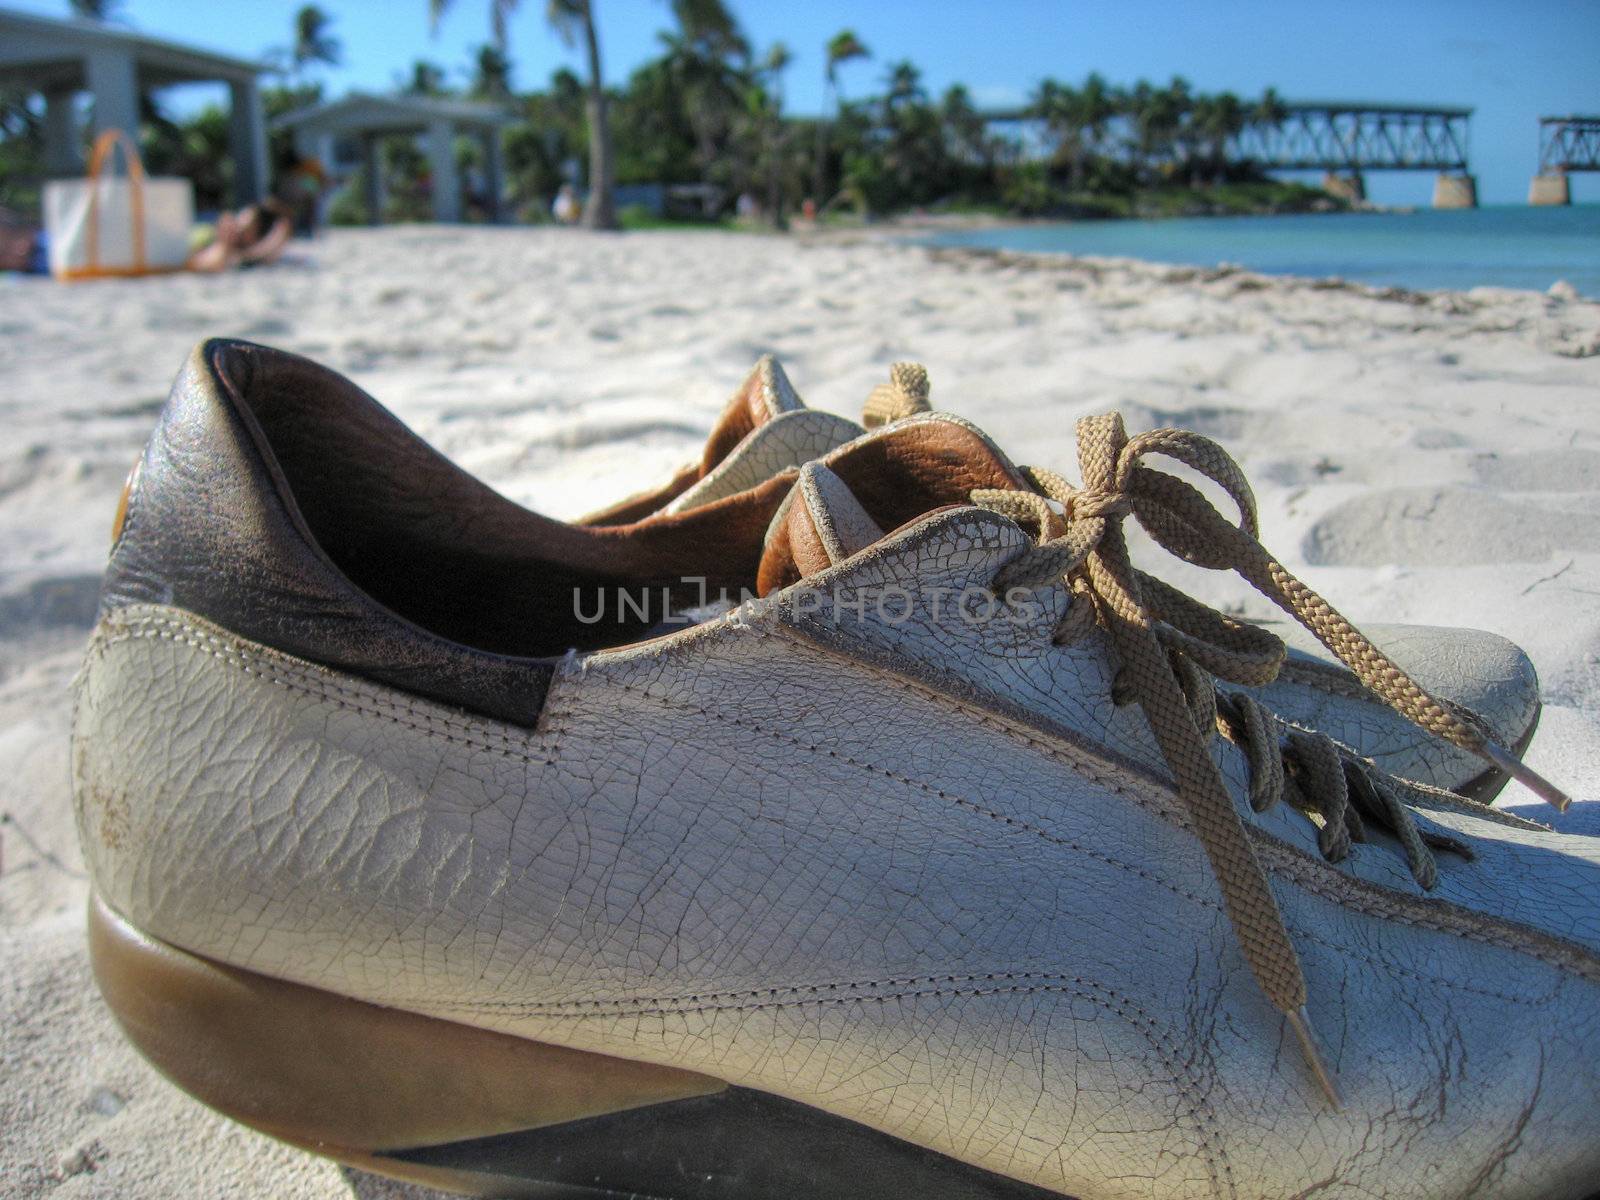 Shoe Detail in Bahia Honda State Park, Keys Islands